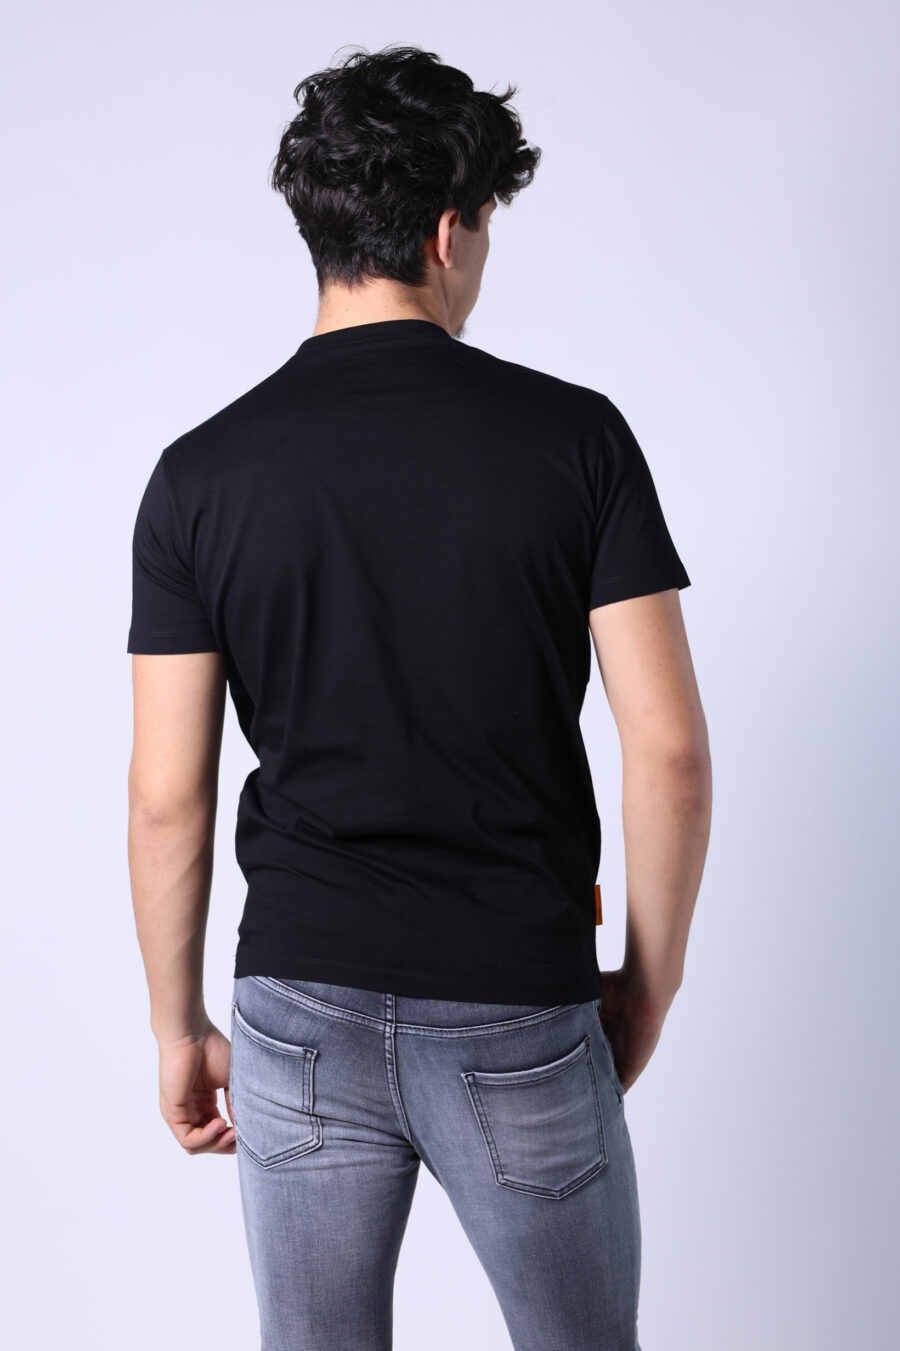 Camiseta negra con maxilogo fantasma "pac-man" - Untitled Catalog 05638